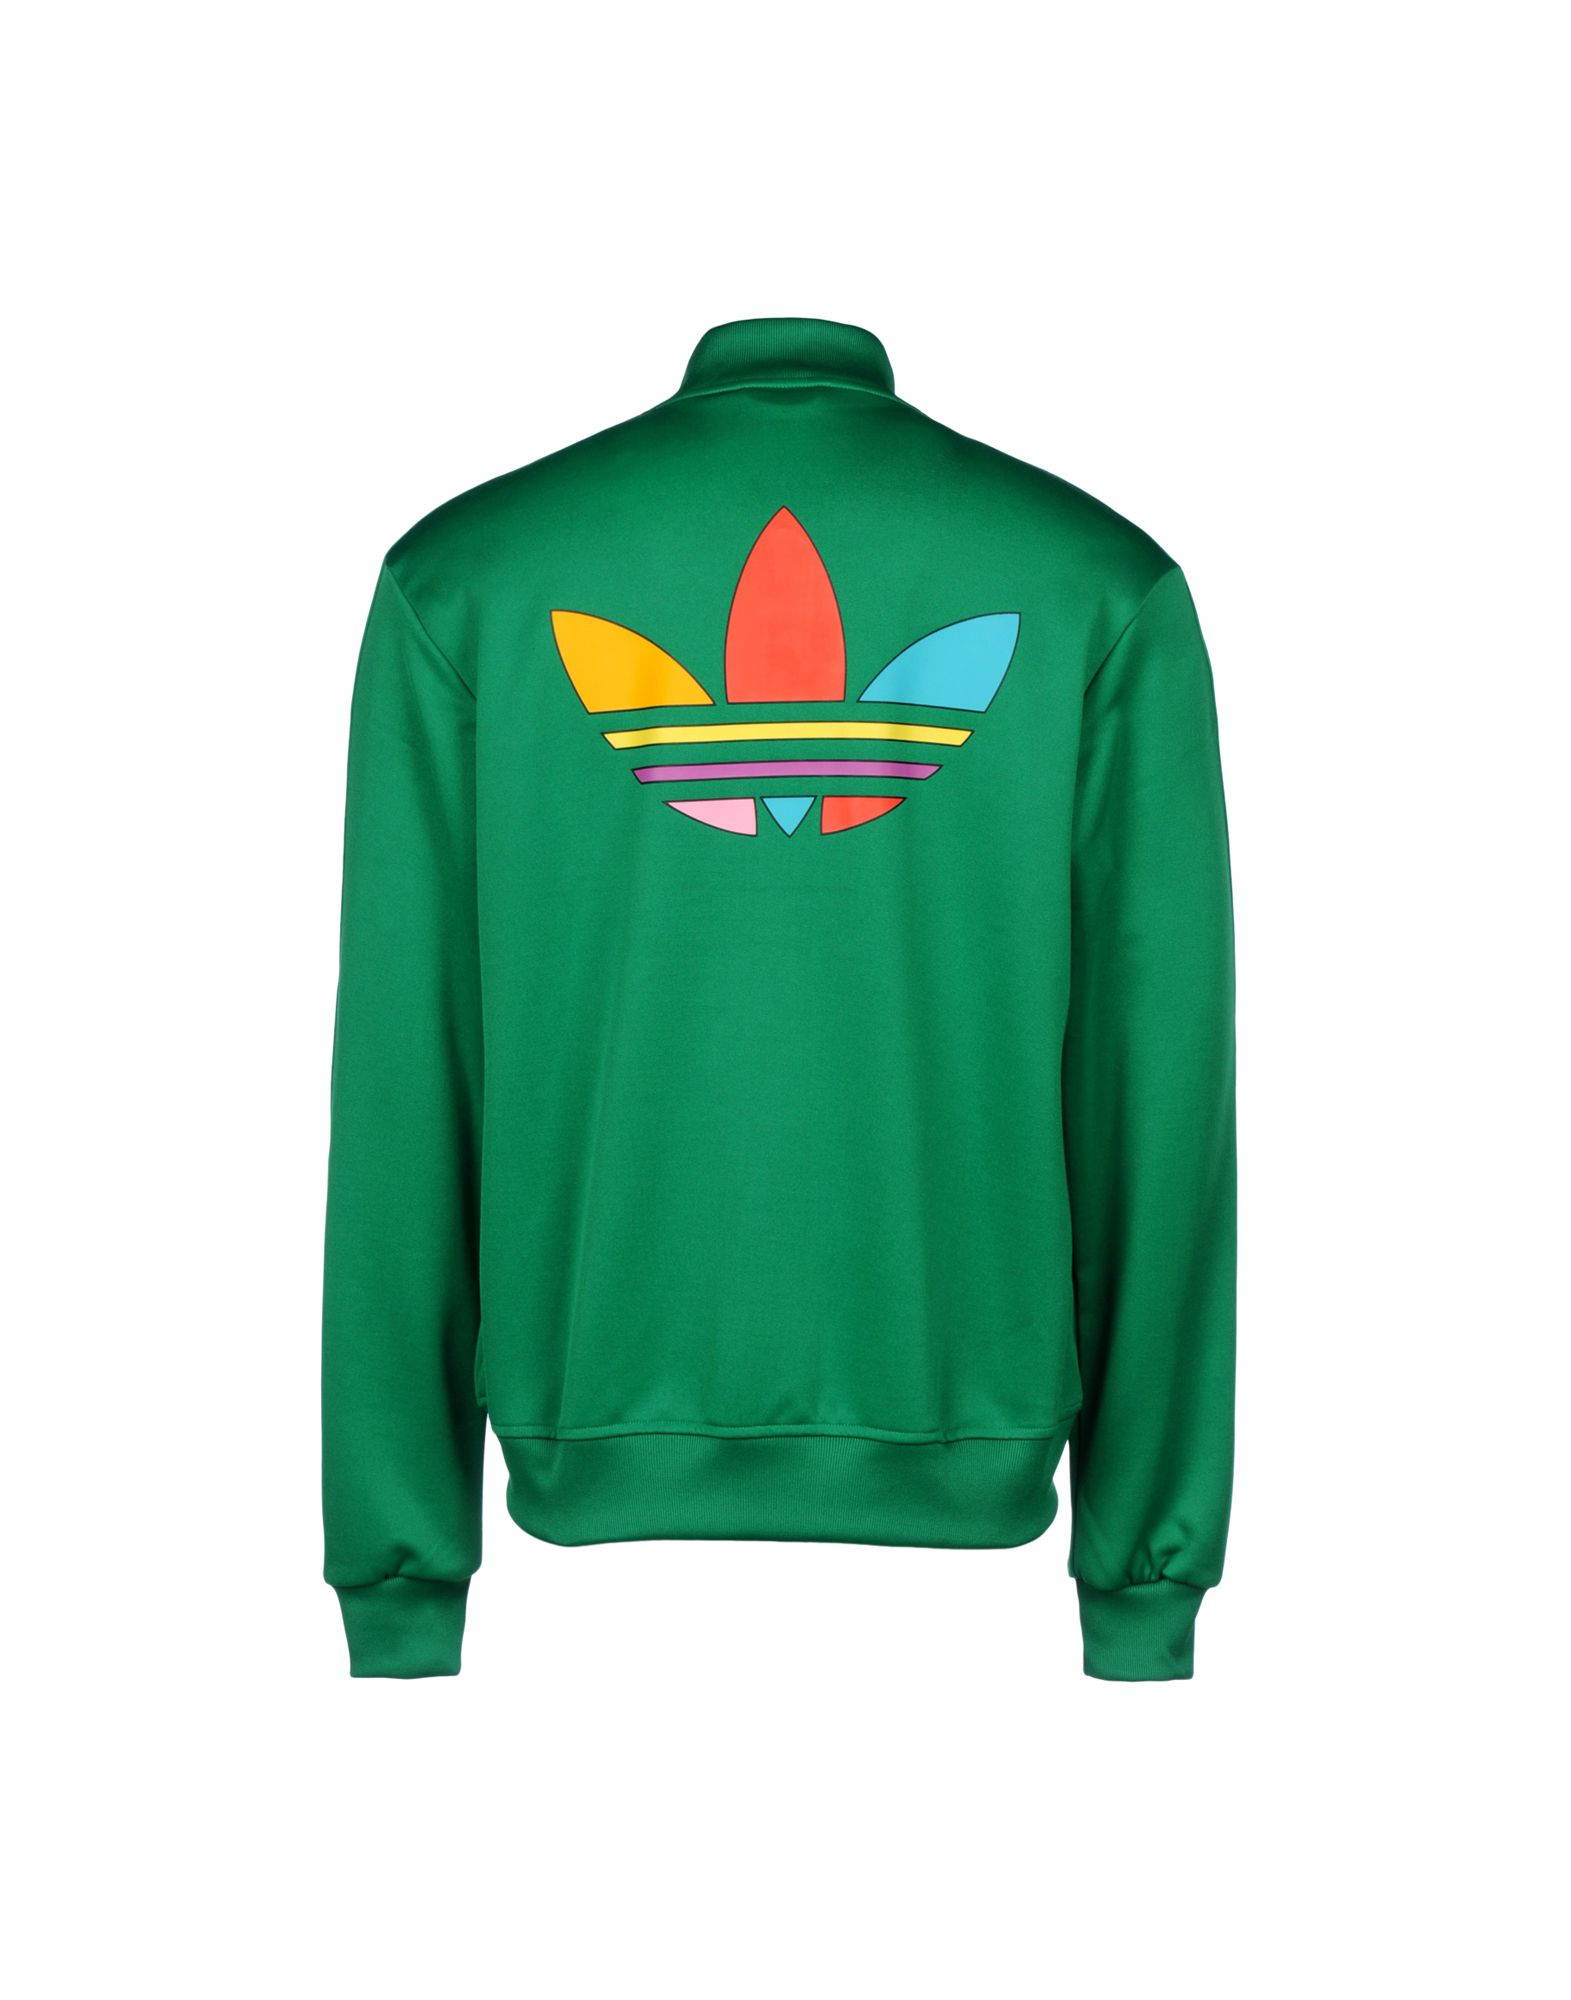 Lyst - Adidas Sweatshirt in Green for Men